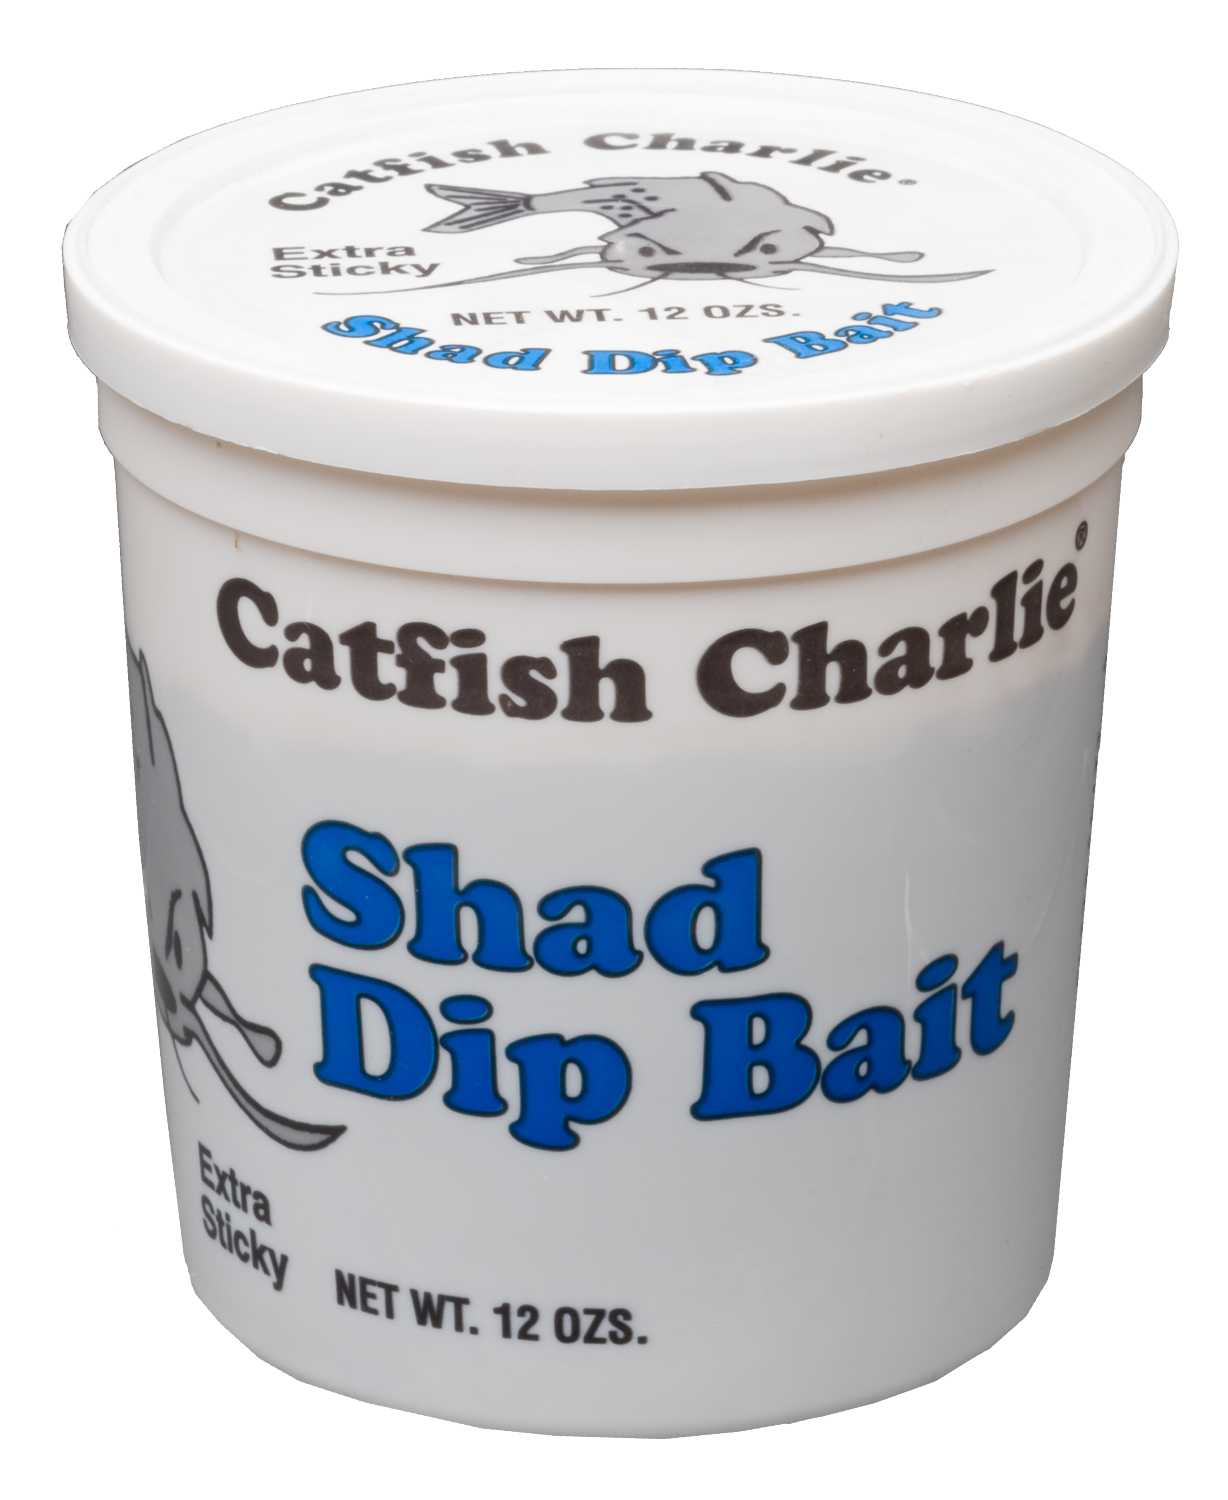 Catfish Charlie Blood Dip Bait - 12 Ounce